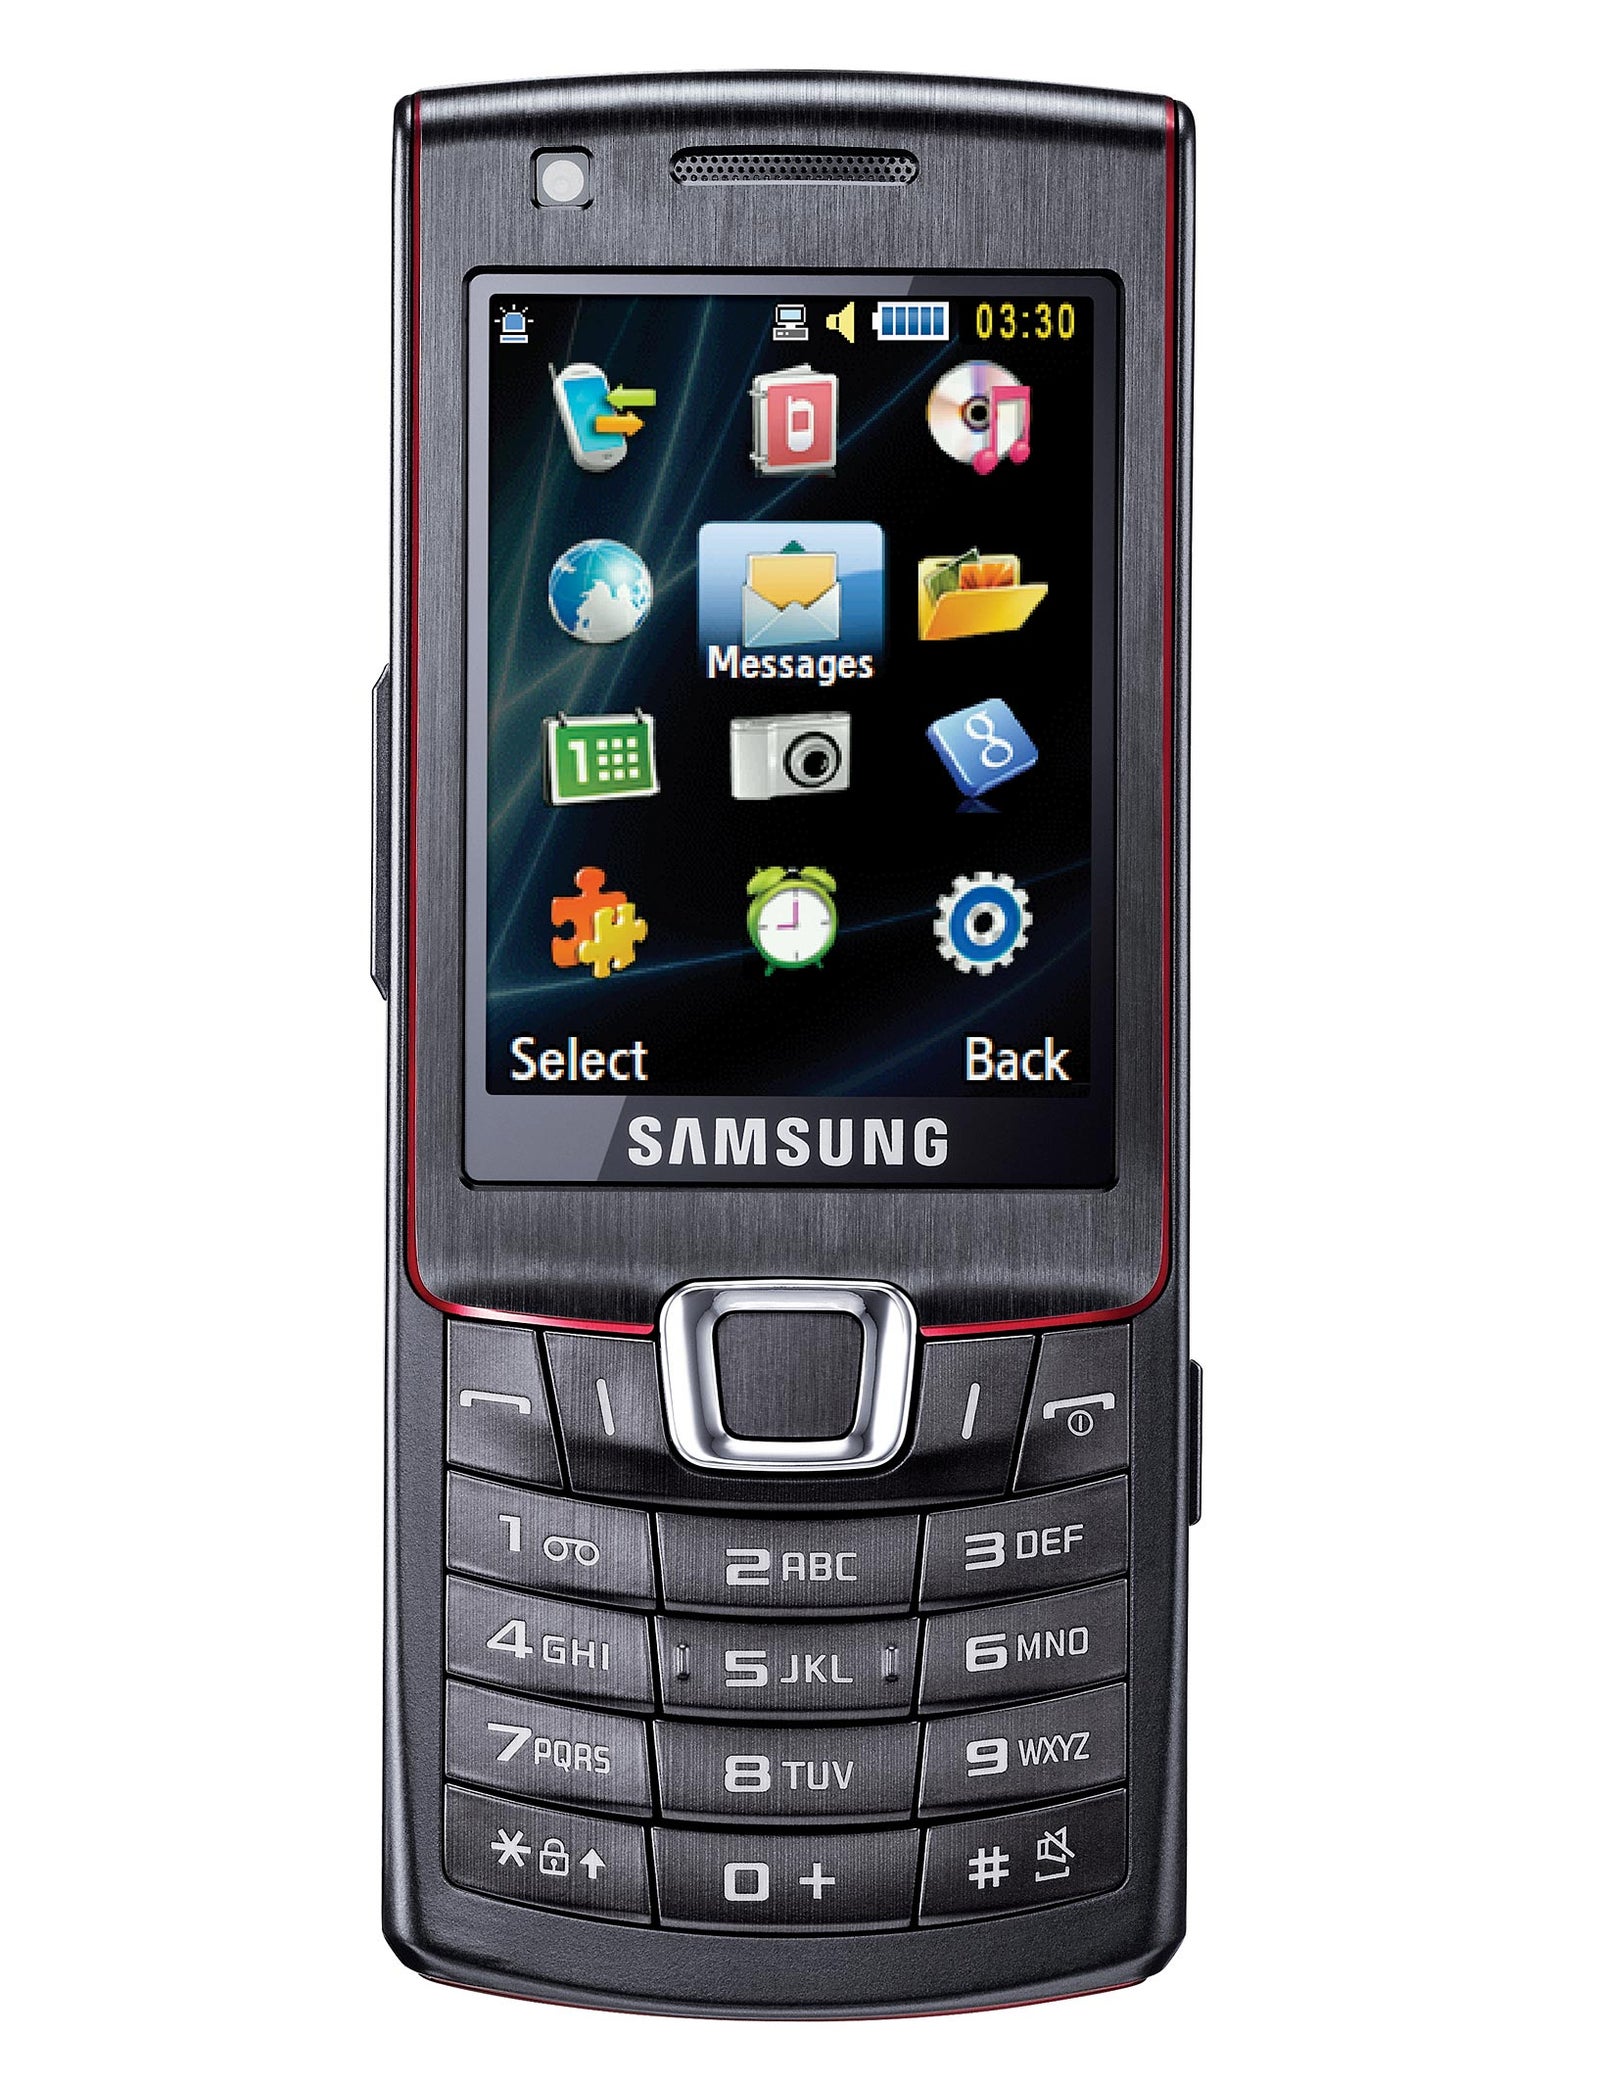 Samsung ultra. Samsung Ultra b gt-s7220. Samsung s7220 Ultra. Samsung gt-s7220. Samsung gt-s7220 Ultra.